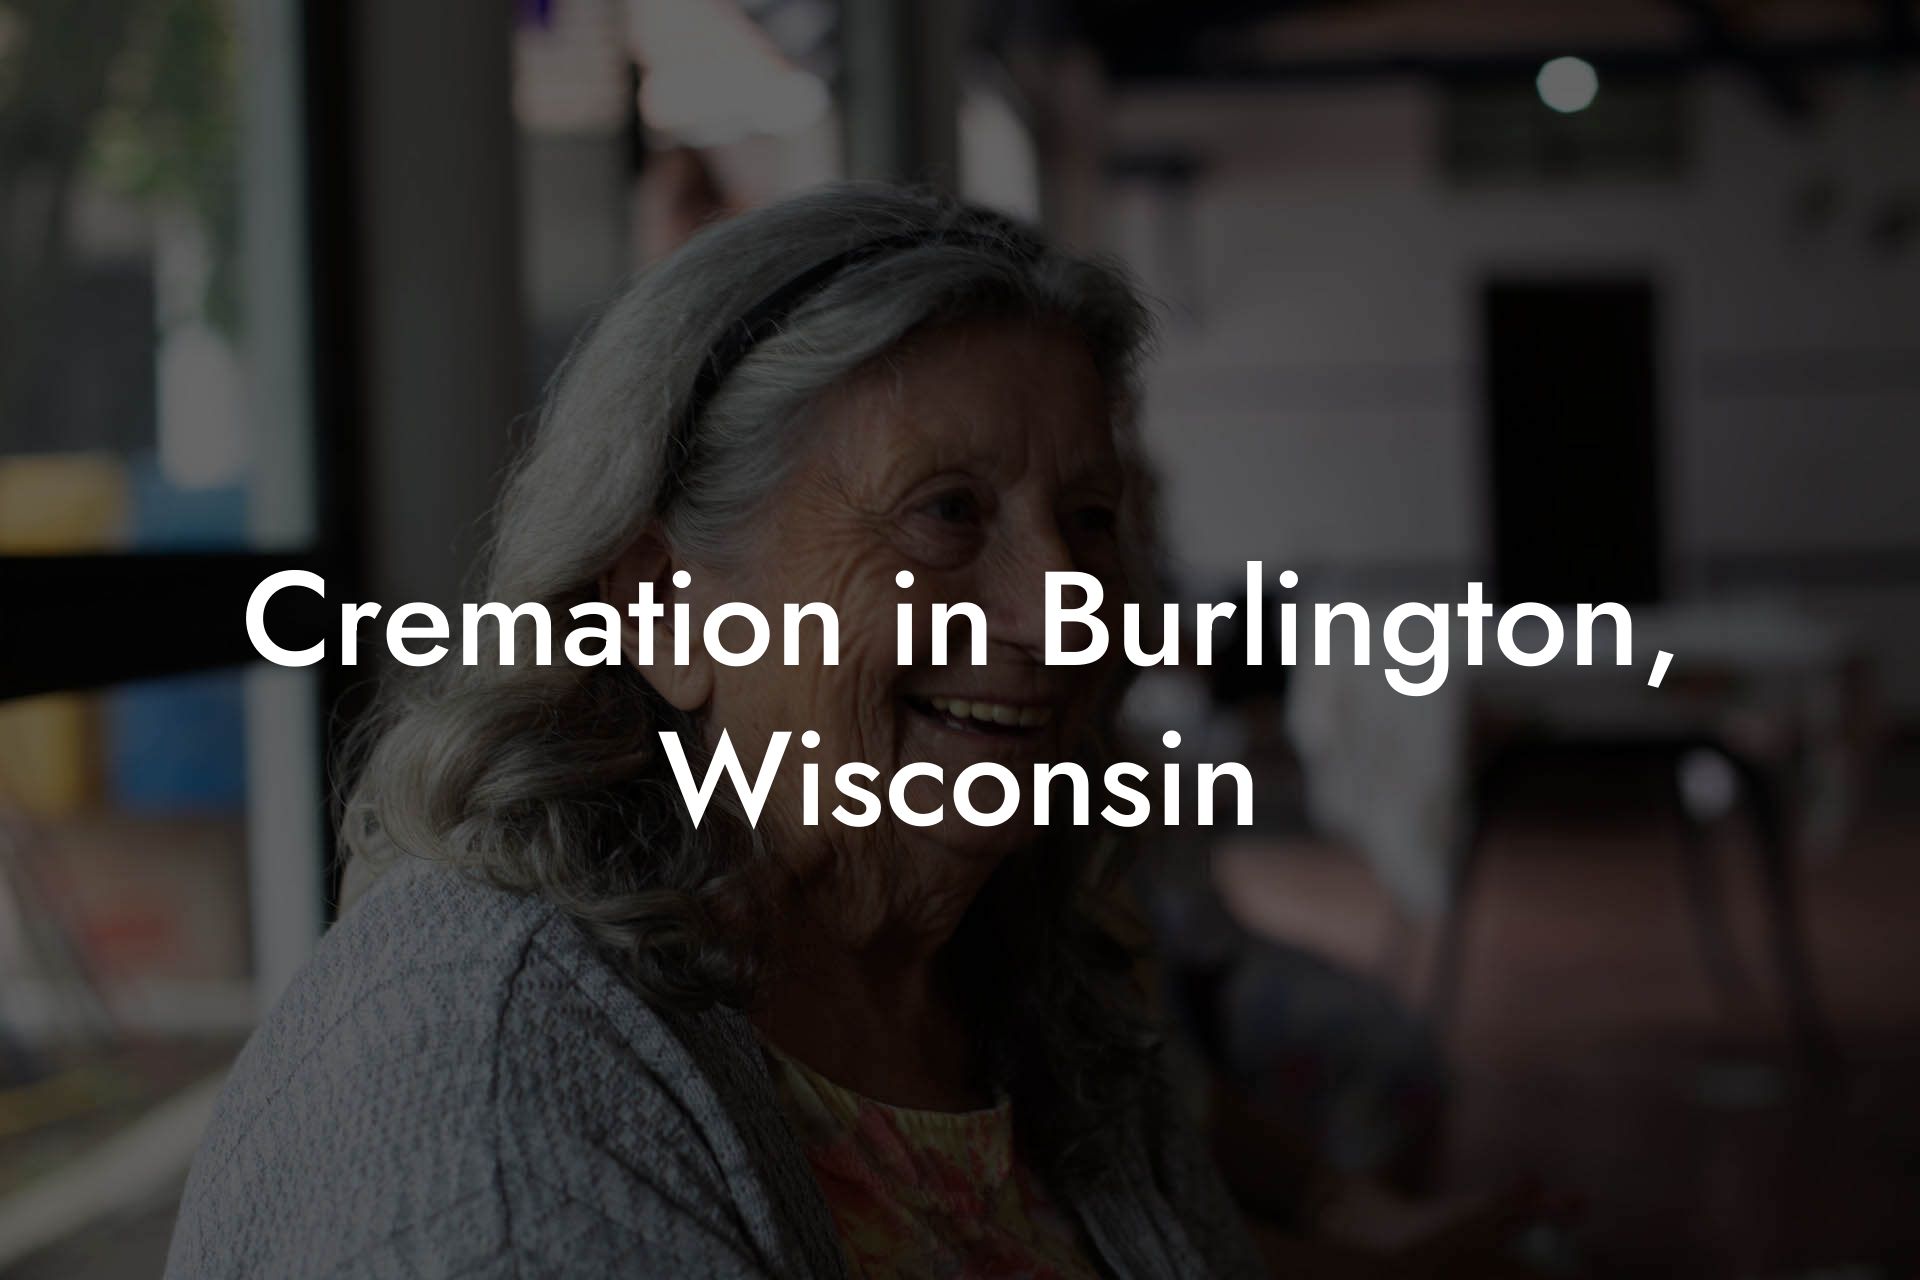 Cremation in Burlington, Wisconsin